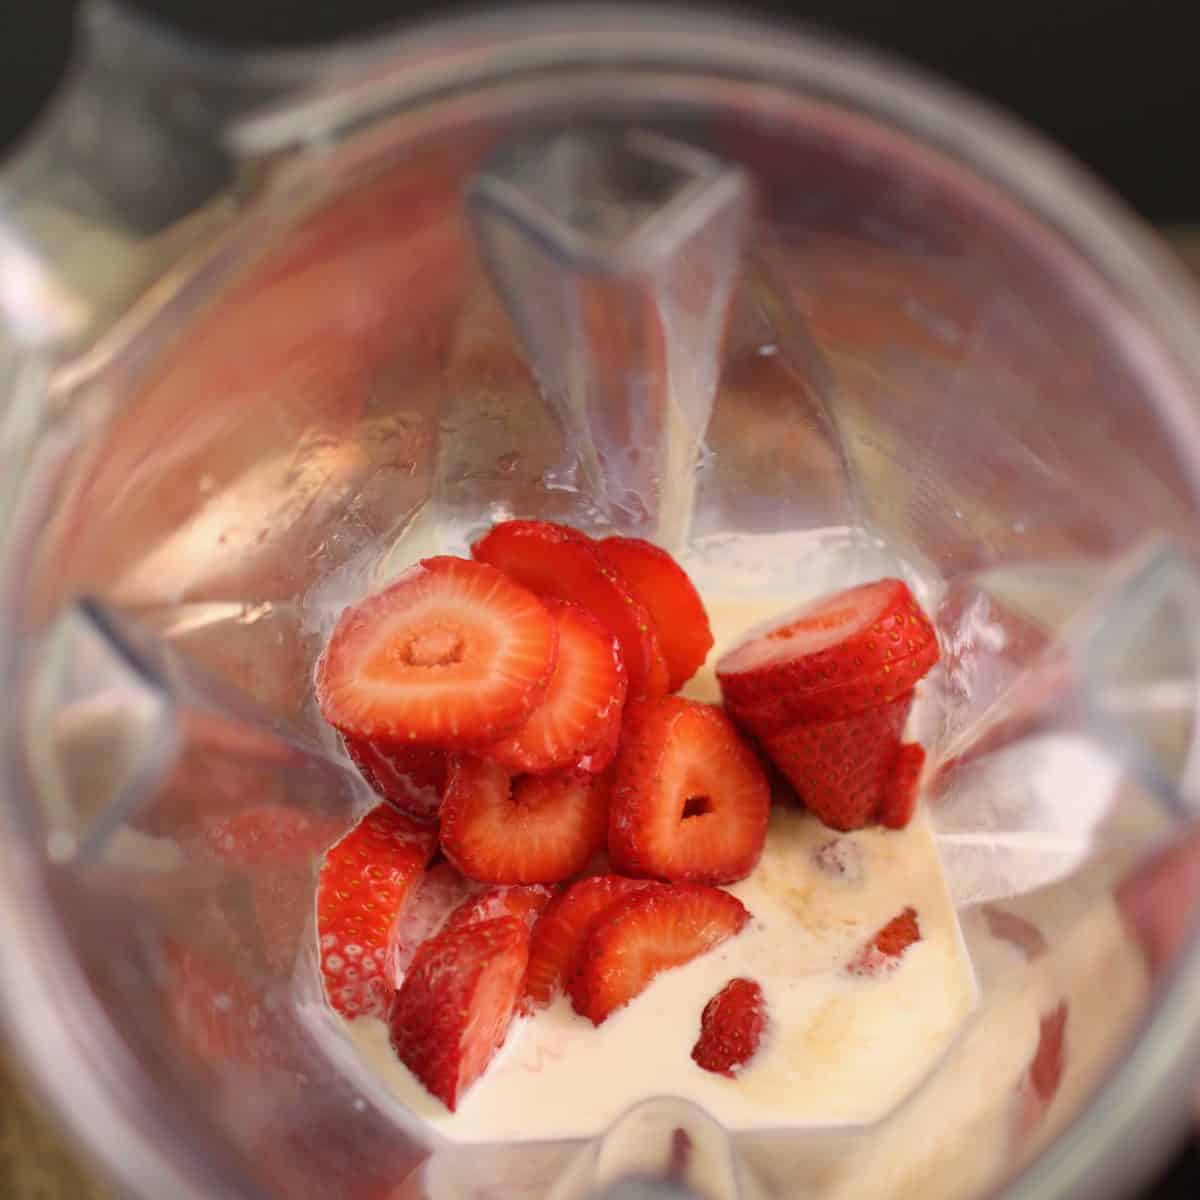 a strawberry milkshake in a mason jar on a tray next to a carton of ice cream.